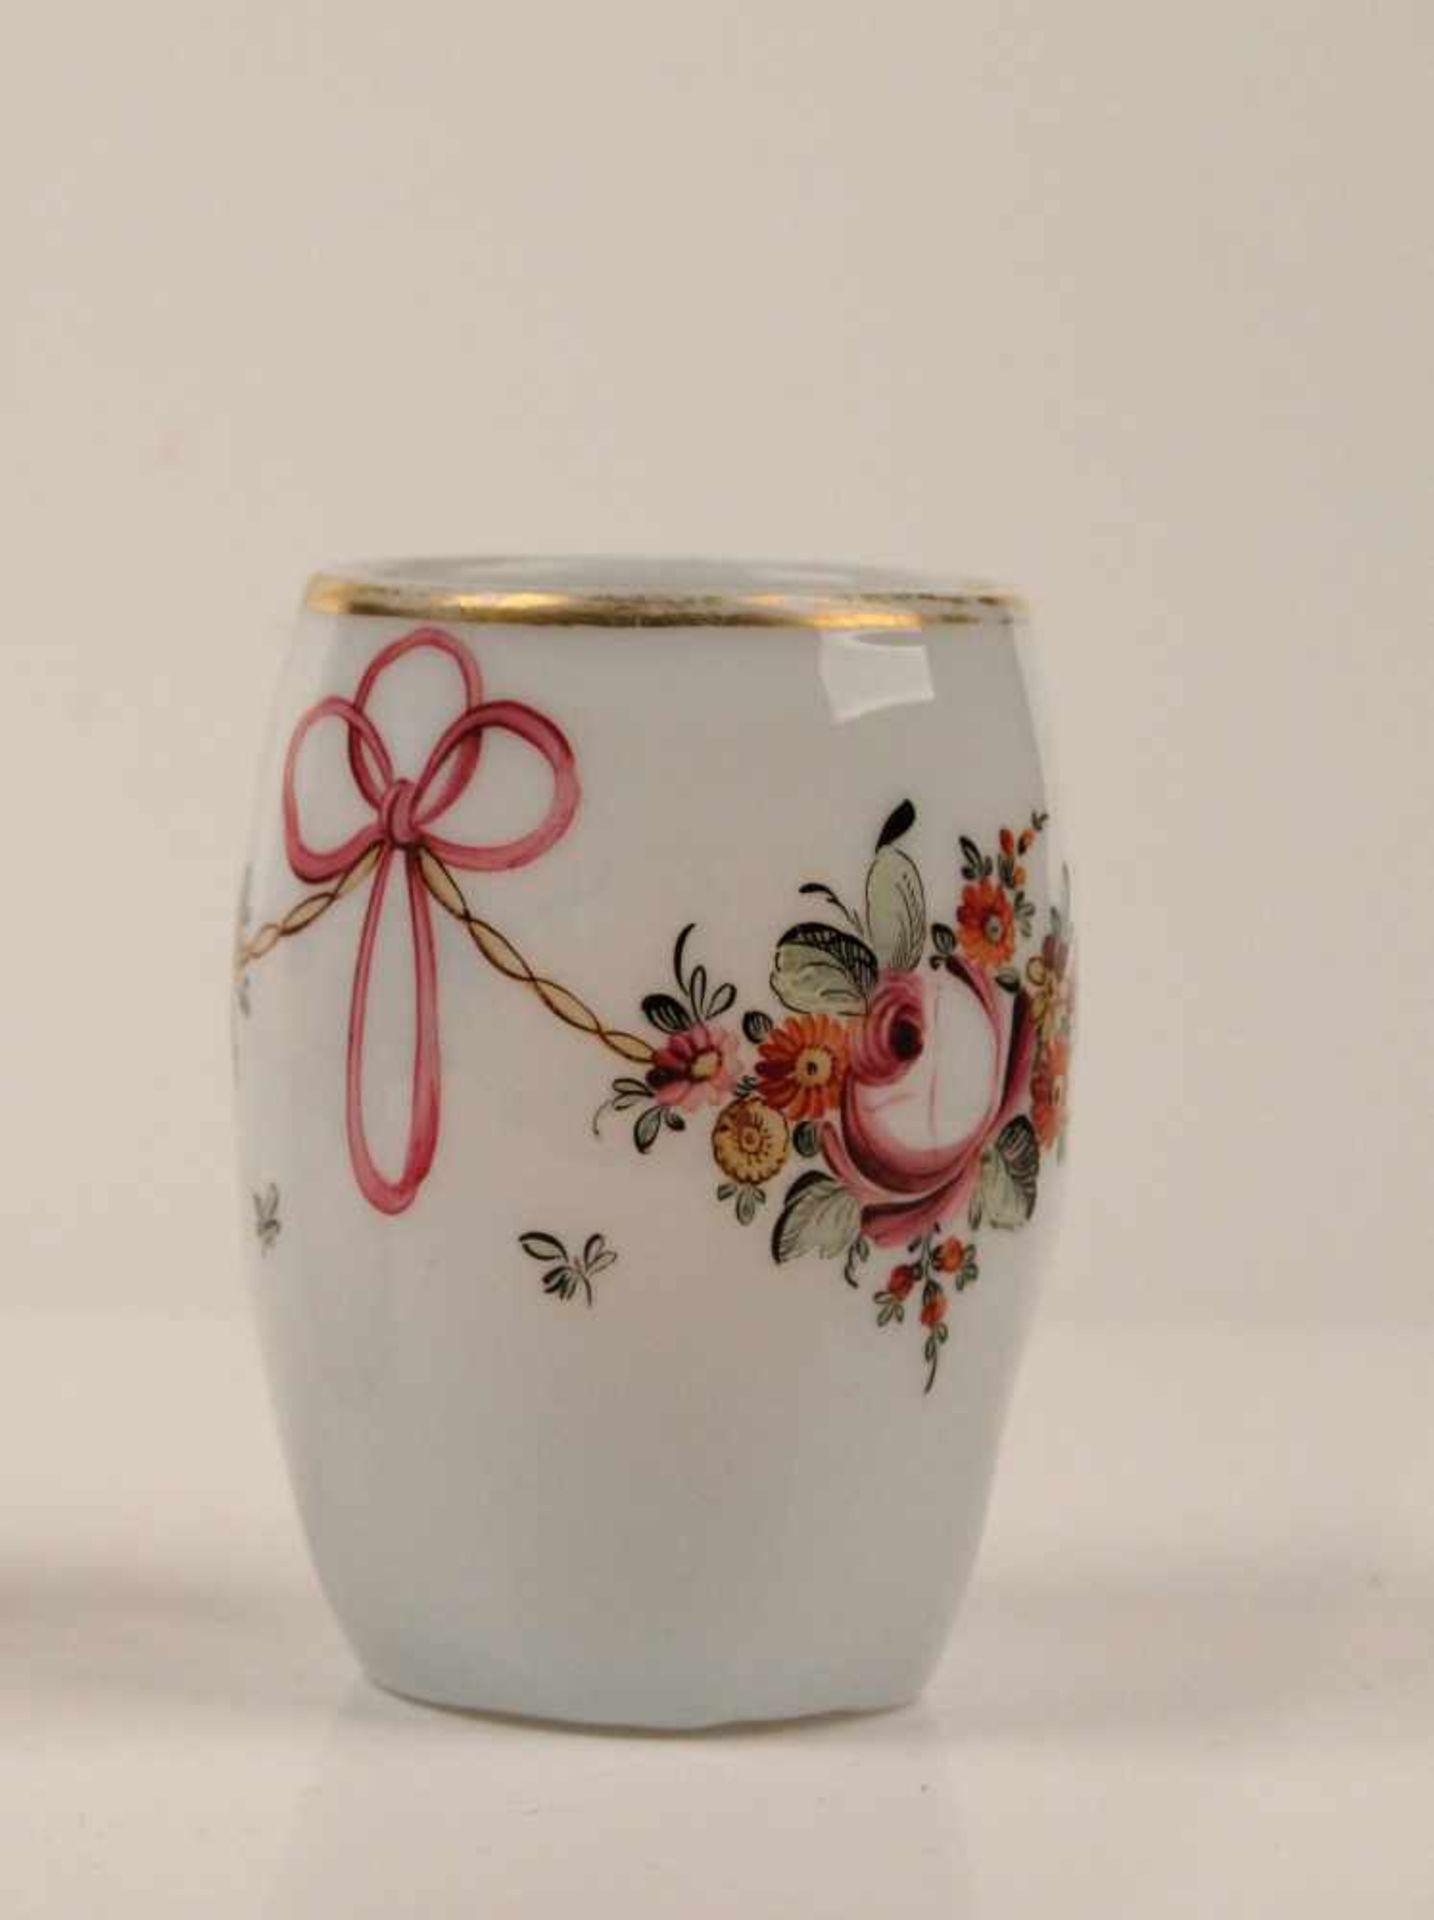 Milchglaskrüglein.Böhmen, Ende 18. Jh. Bemalt mit Blumenbuketts. Goldrand. H: 10,5 cm.